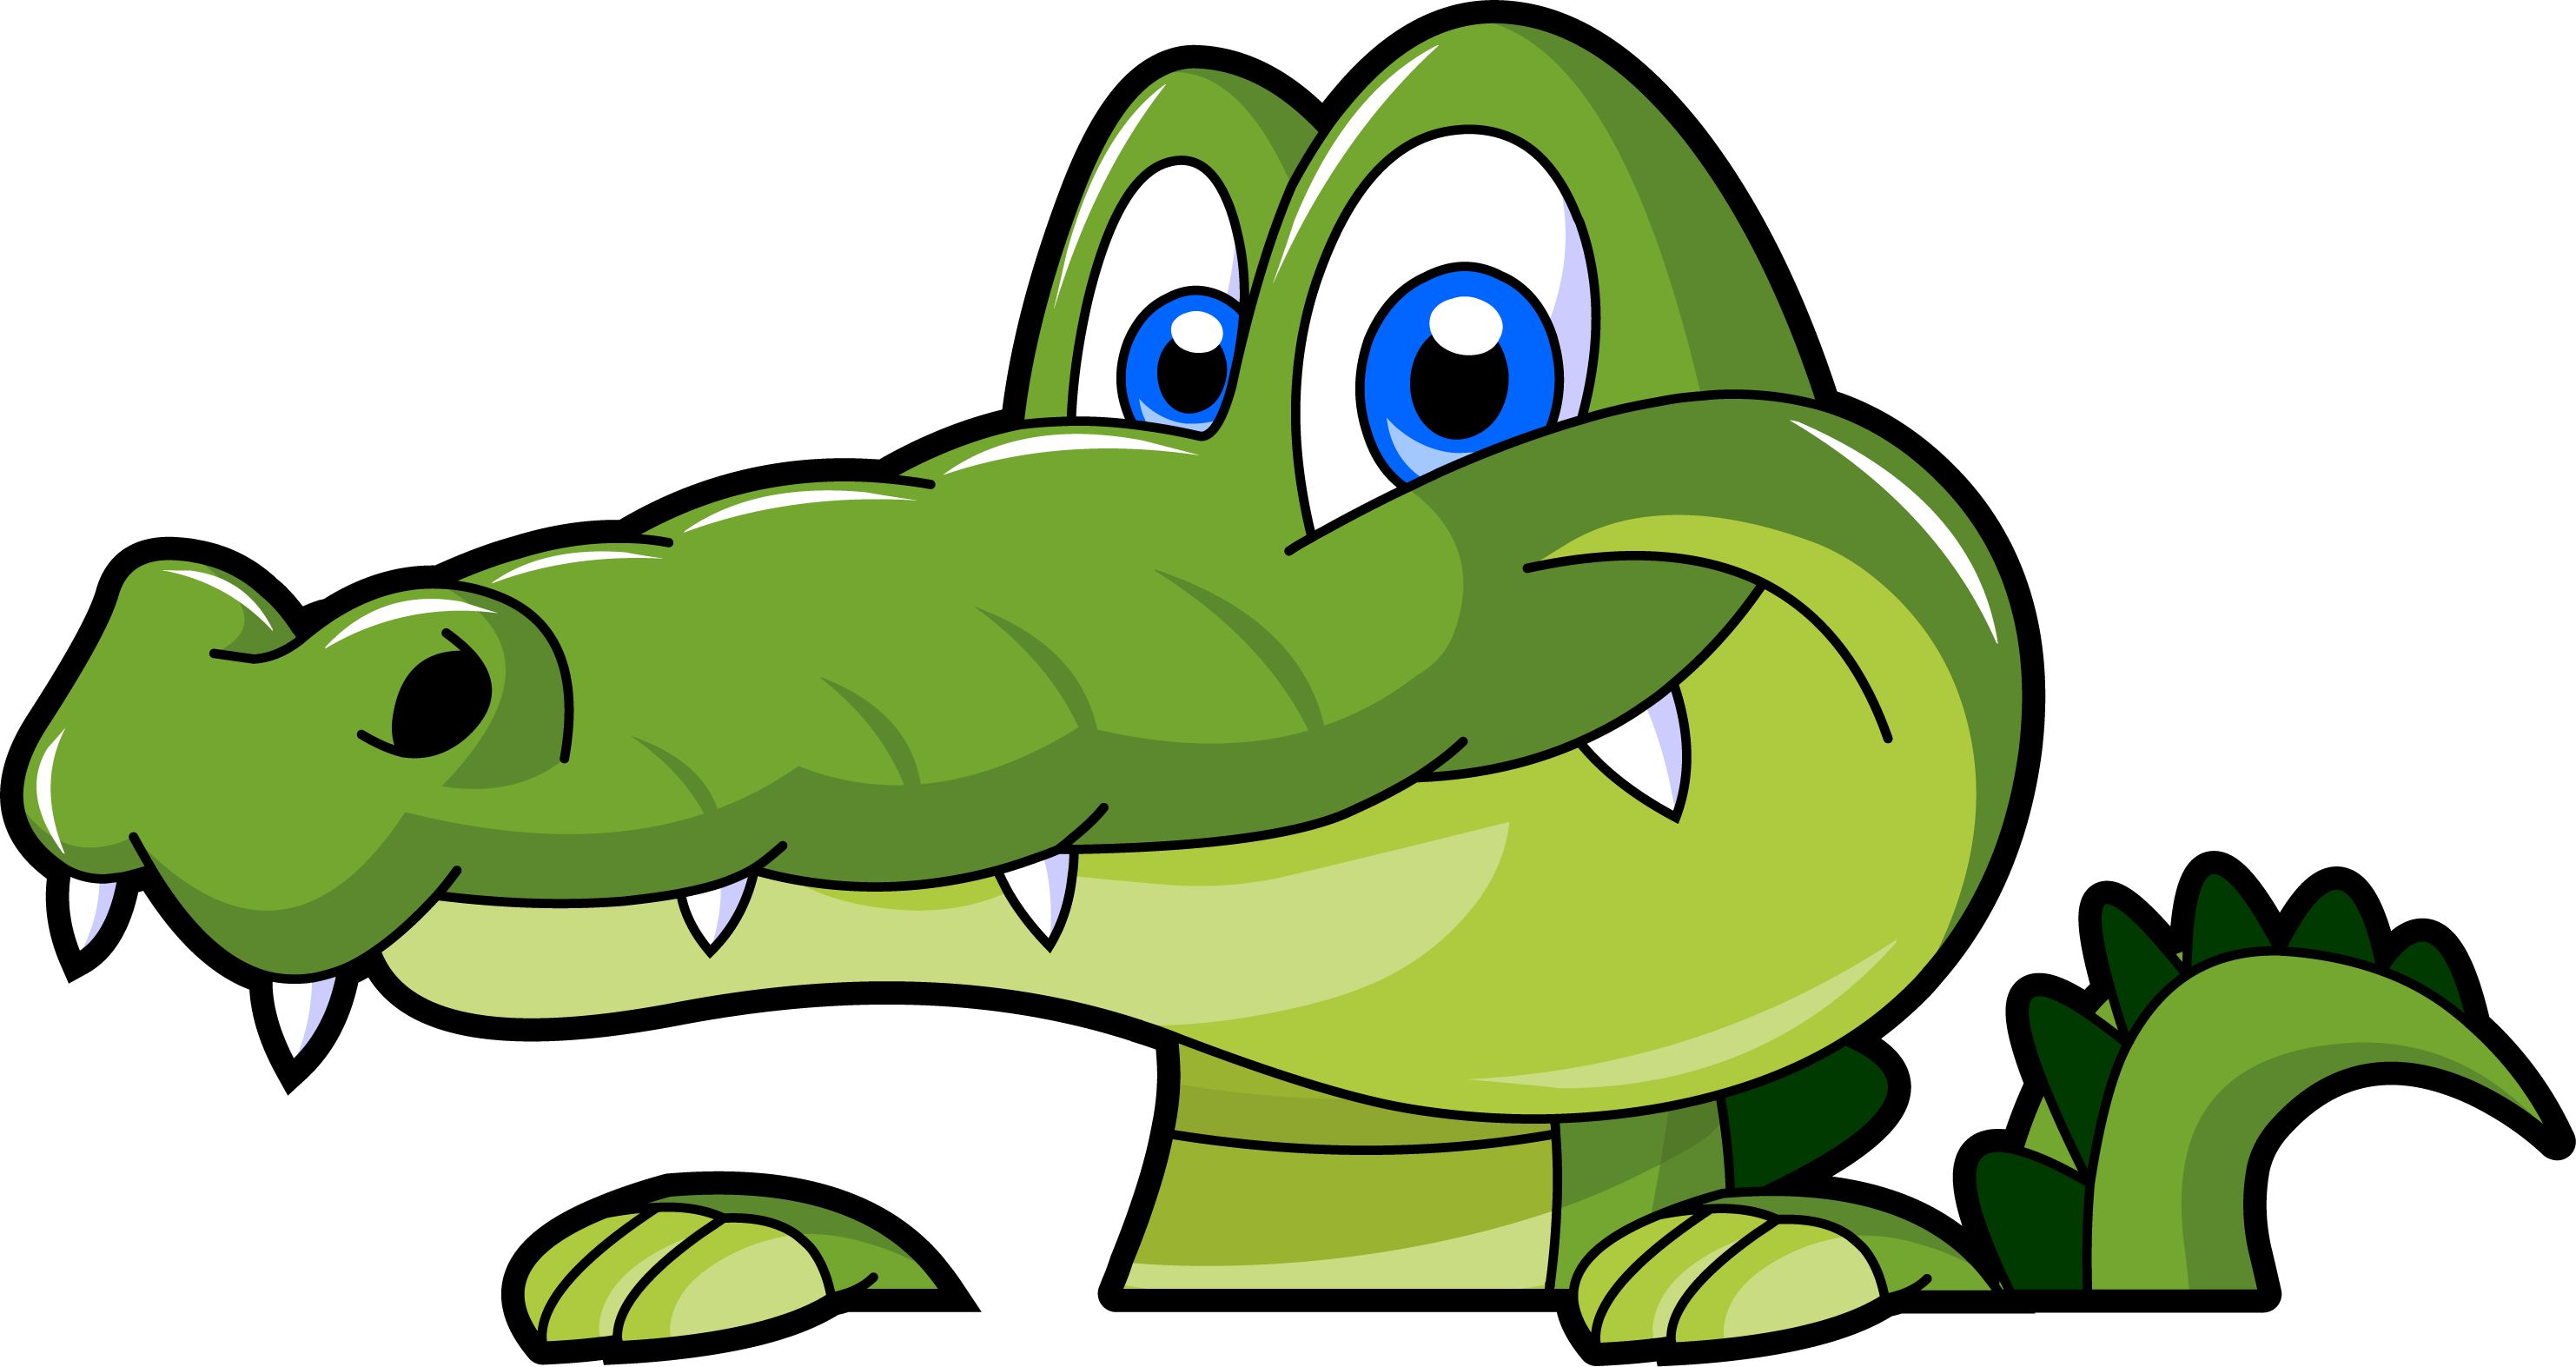 Swamp Alligator Cartoon Image Clipart Clipart